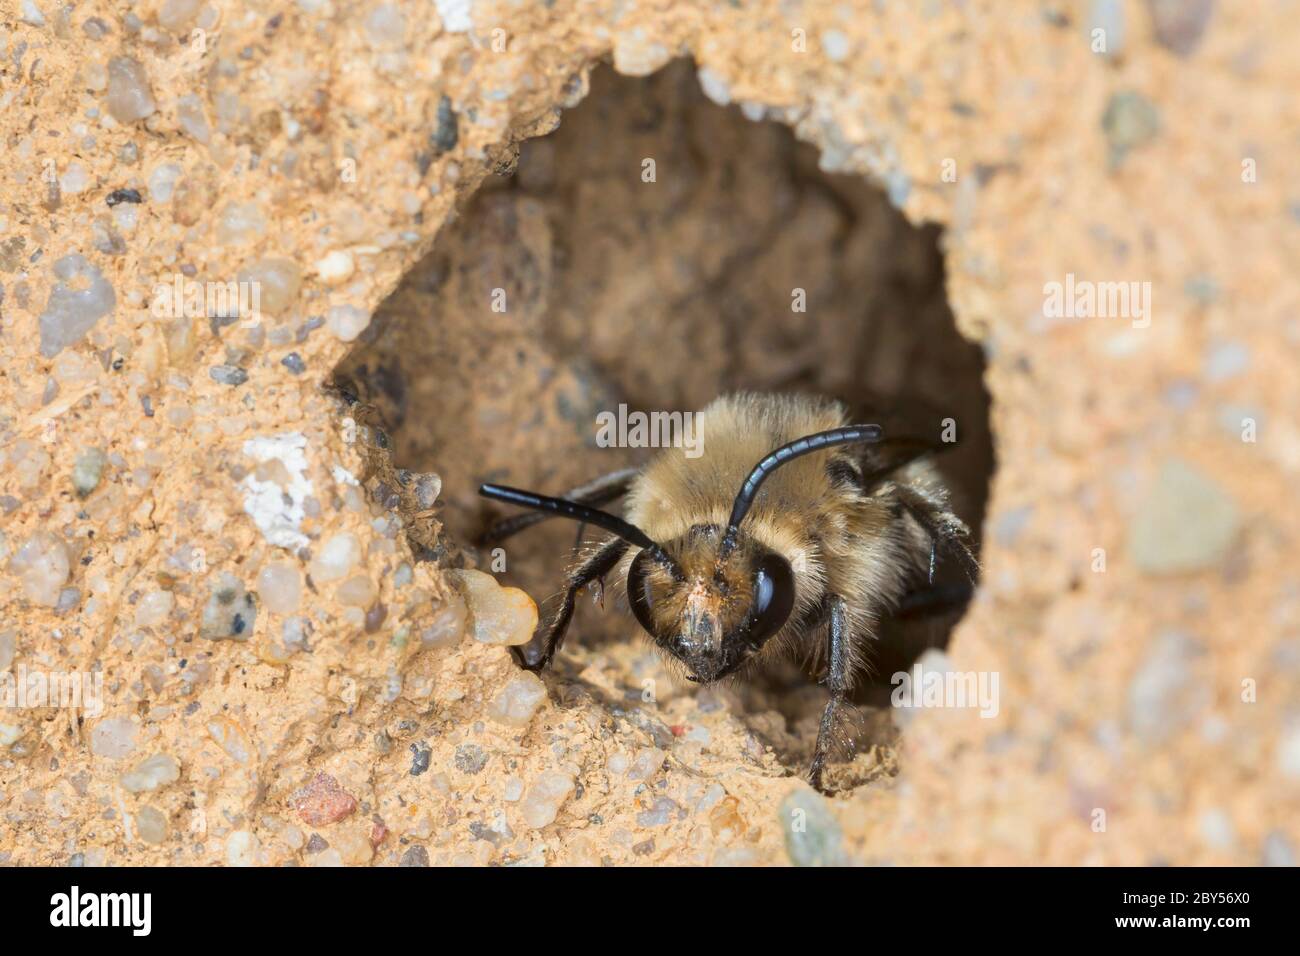 Abeja lucadora (Melecta albifrons, Melecta punctata, Melecta armata), hembra en una pared de arcilla en el tubo de cría de una abeja flor de patas peludas (Anthophora plumipes), Alemania Foto de stock